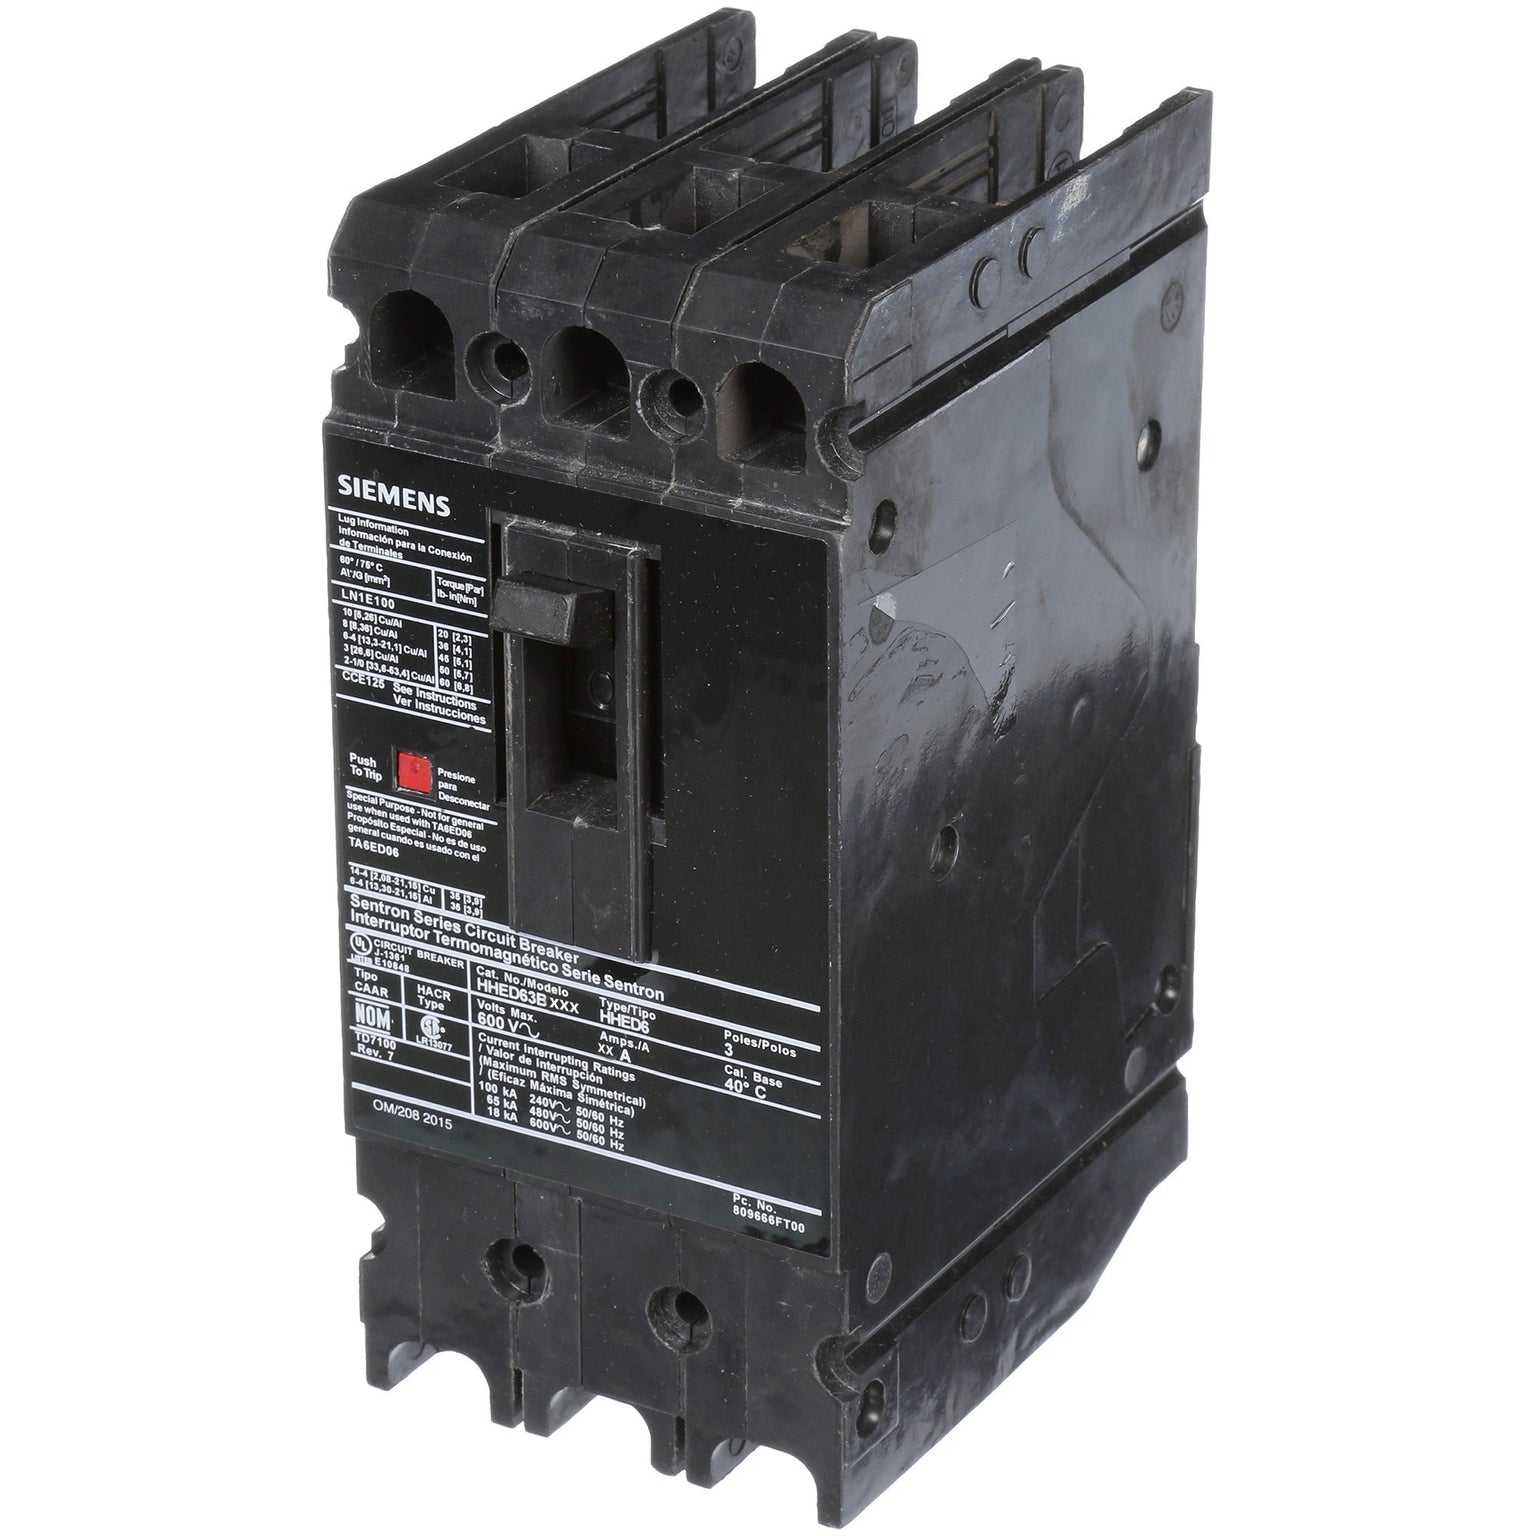 HHED63B025 - Siemens - Molded Case Circuit Breaker